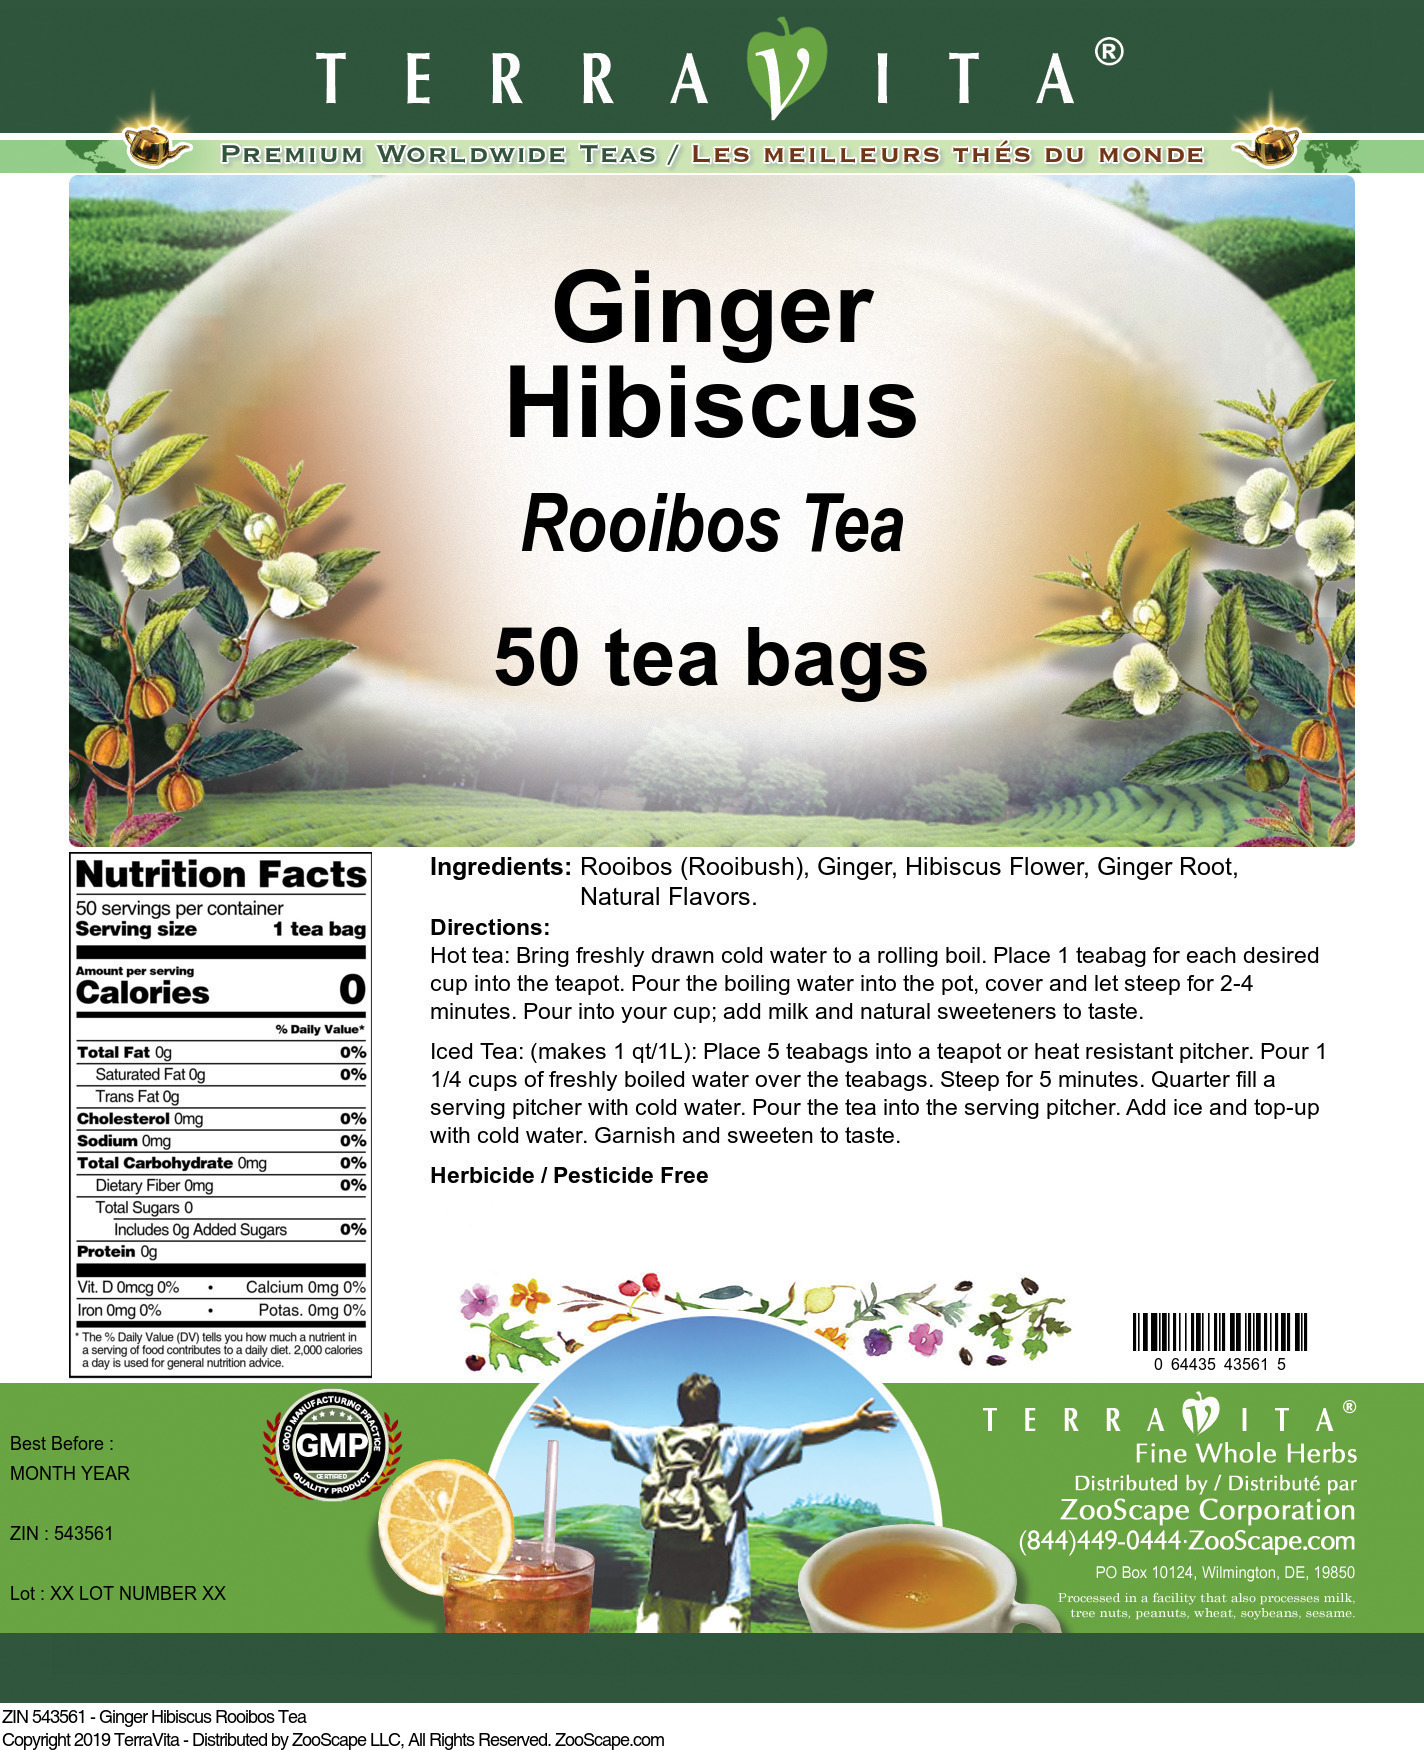 Ginger Hibiscus Rooibos Tea - Label